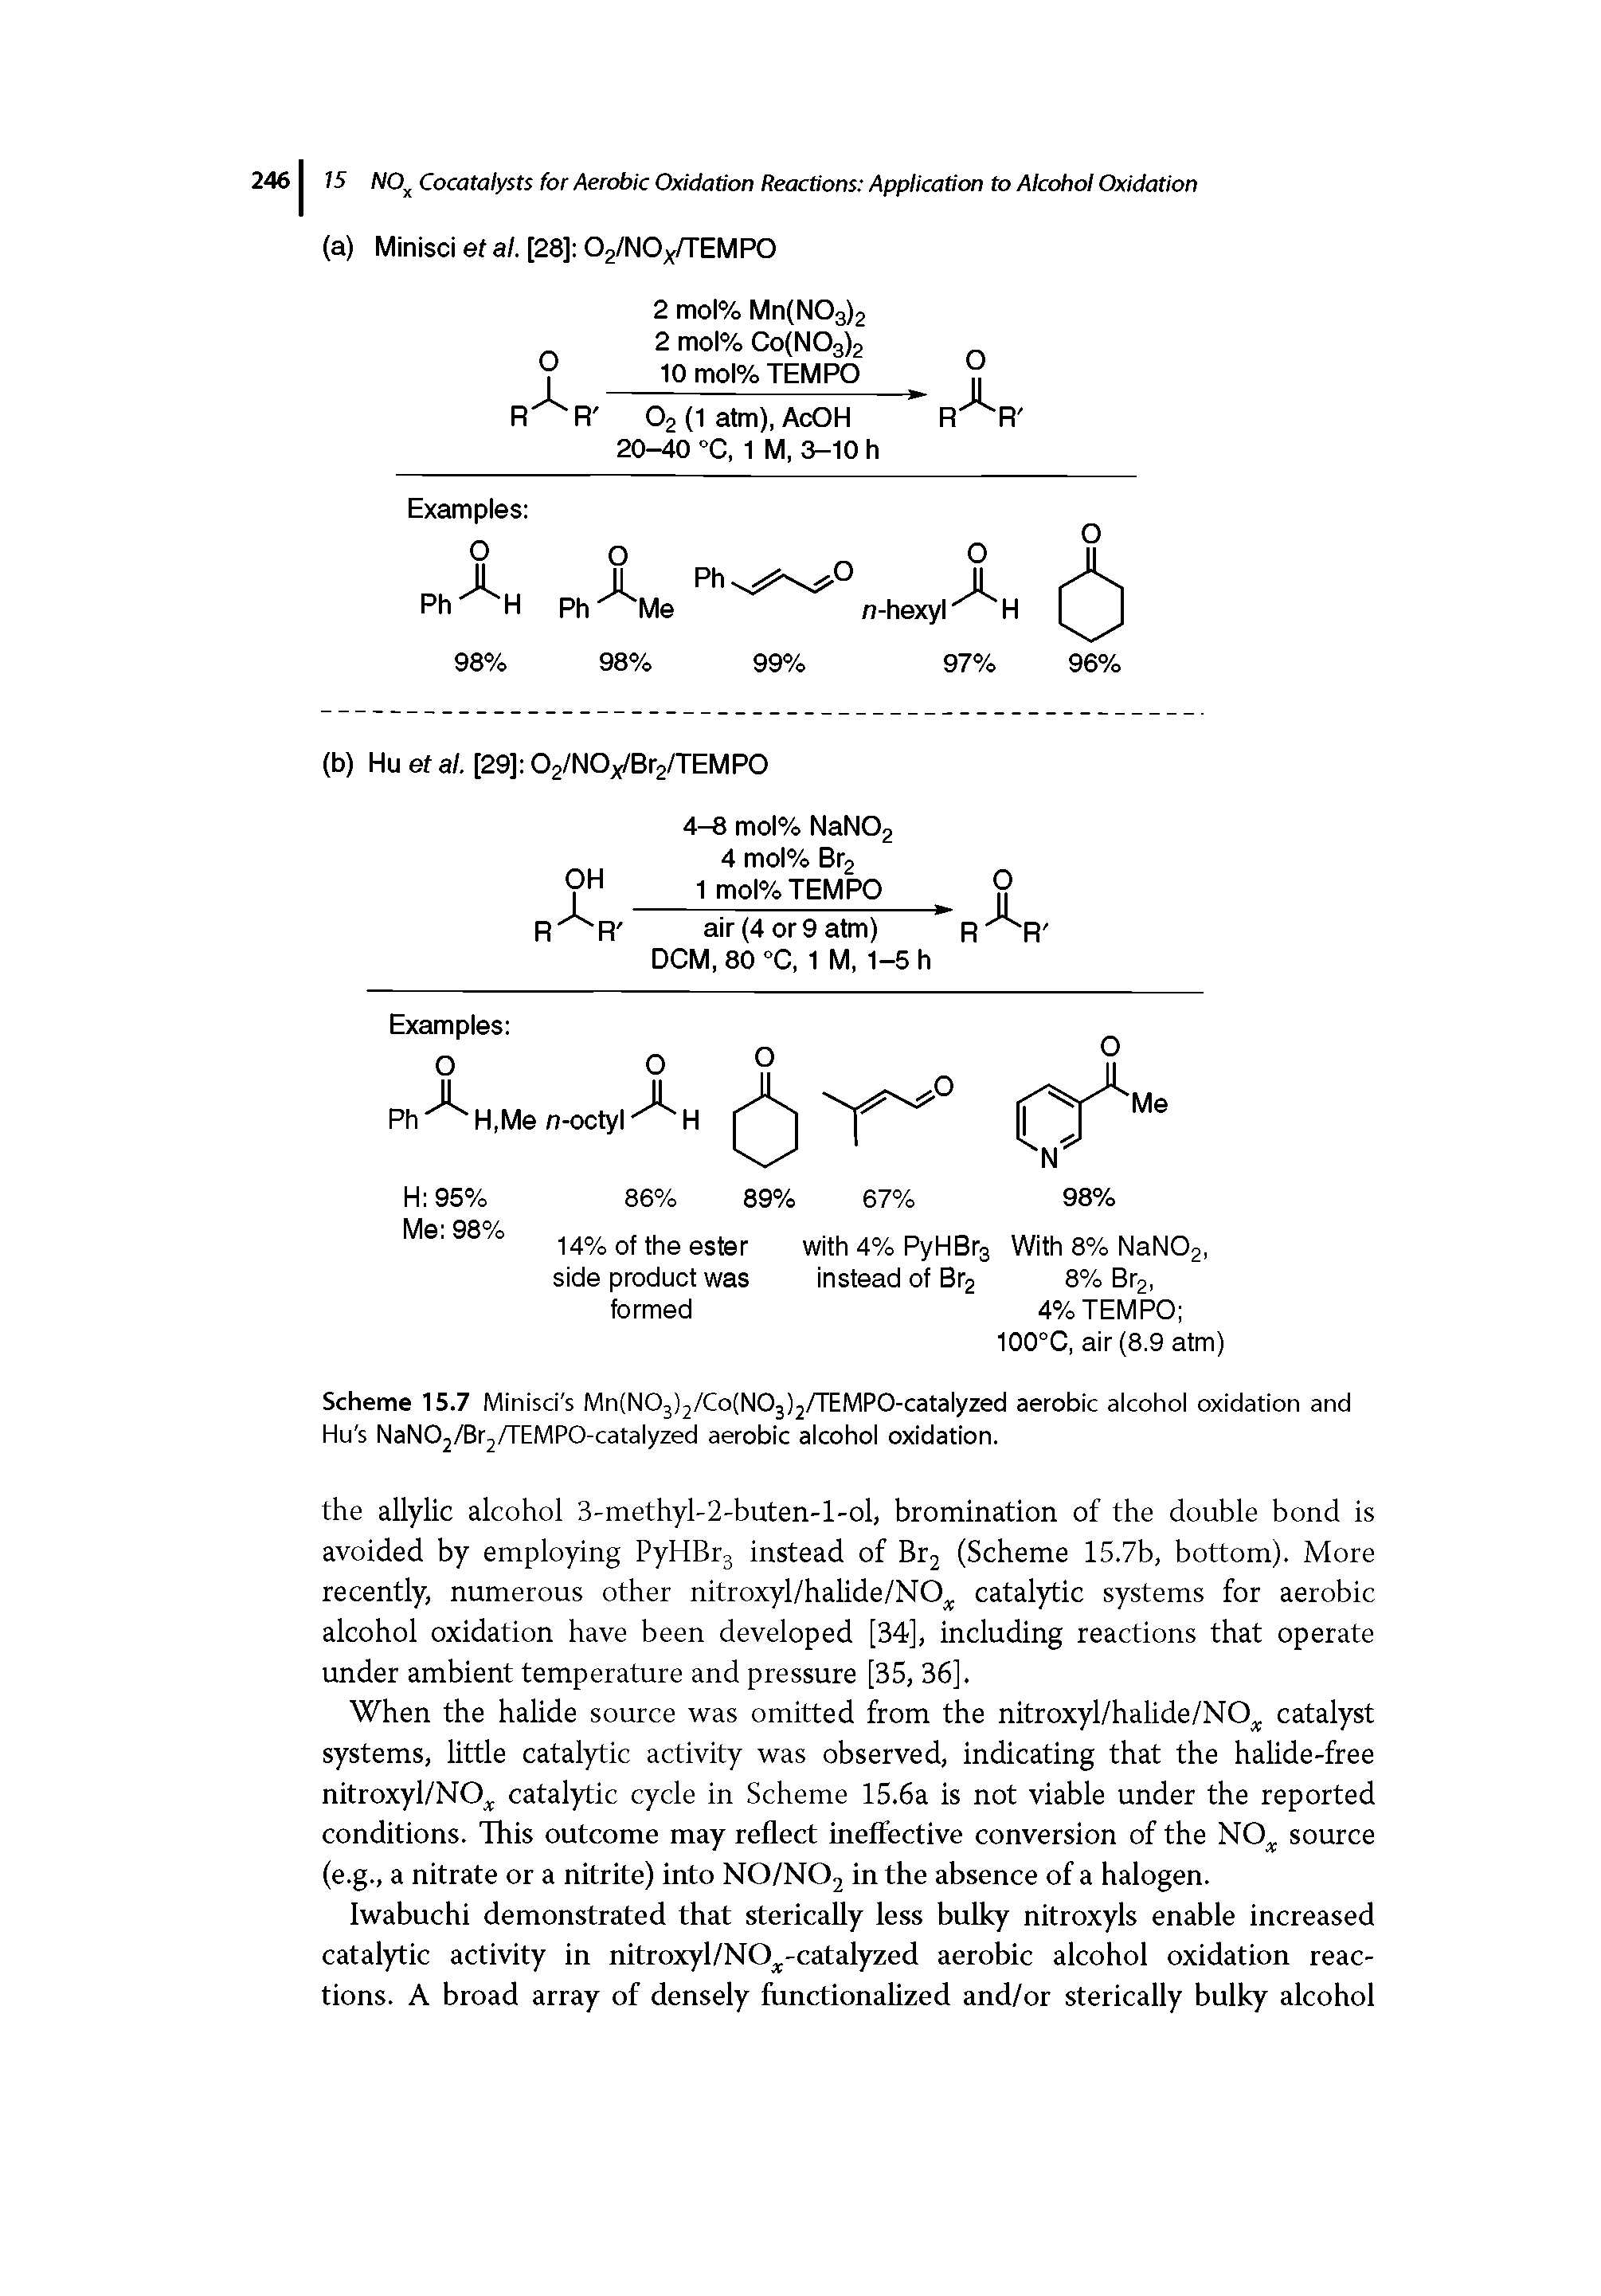 Scheme 15.7 Minisd s MntNOjIj/CotNOjjj/TEMPO-catalyzed aerobic alcohol oxidation and Hu s NaNOj/Brj/TEMPO-catalyzed aerobic alcohol oxidation.